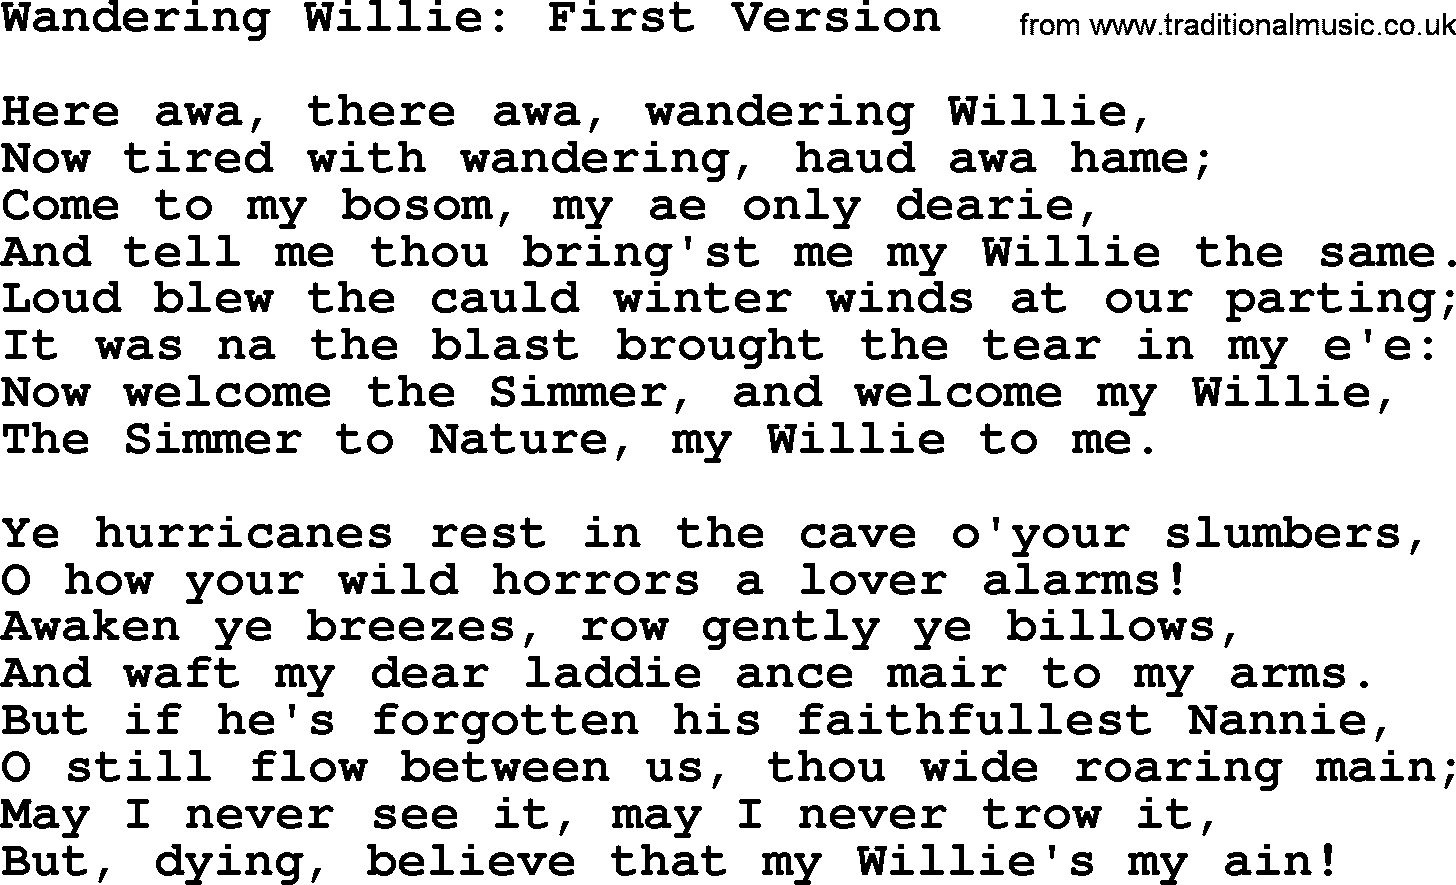 Robert Burns Songs & Lyrics: Wandering Willie First Version